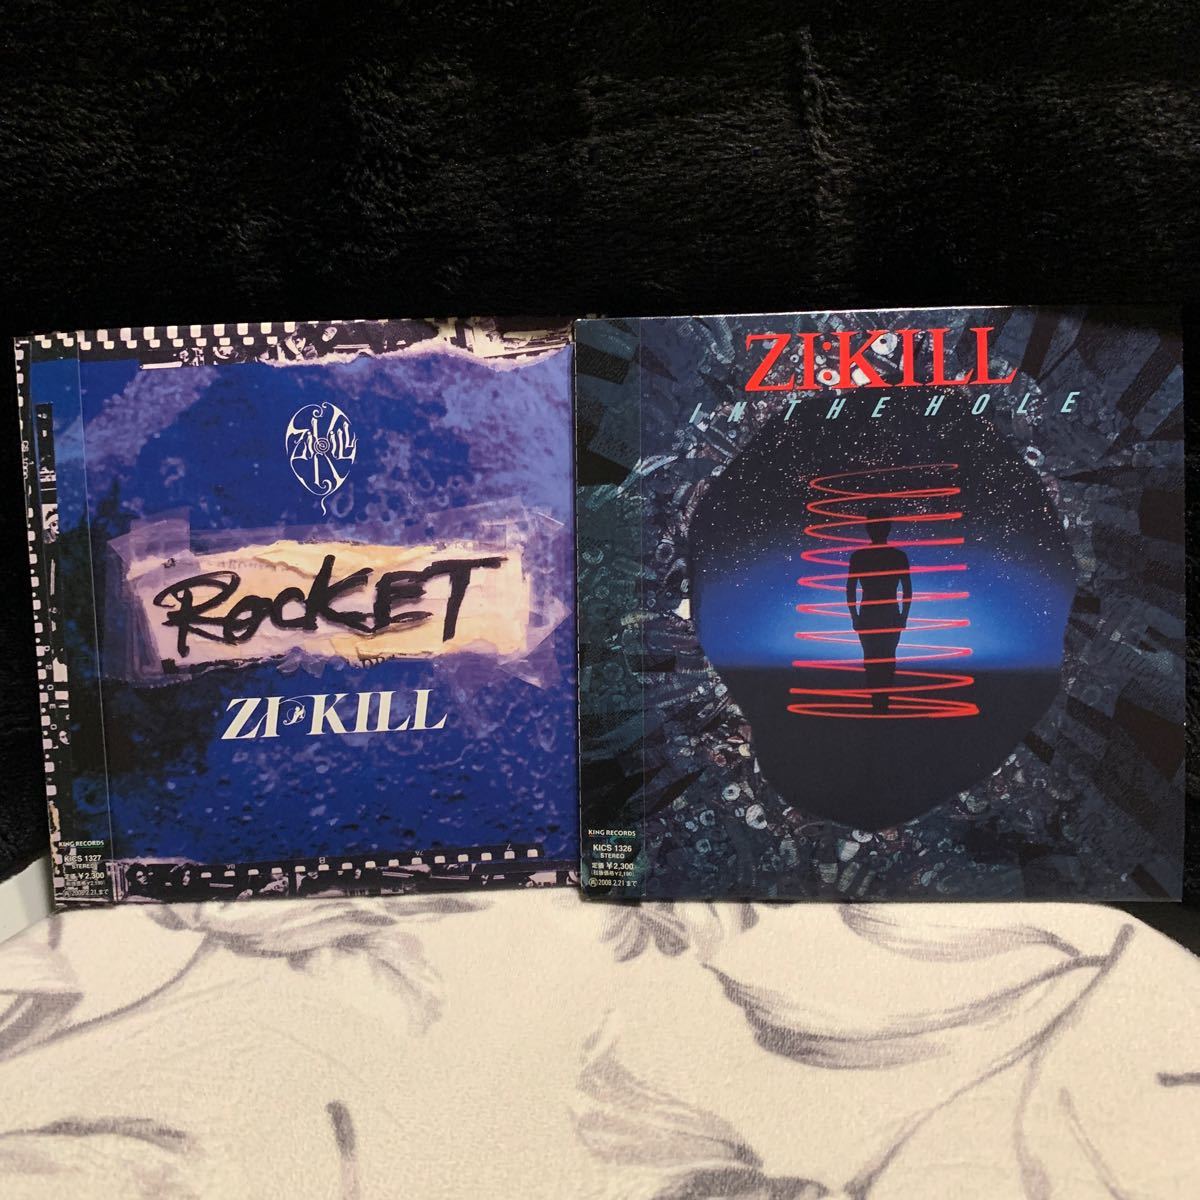 ZI:KILL/ повторный departure бумага jacket CD/IN THE HOLE + ROCKET/TUSK/ji cut /SLUTBANKS/vez